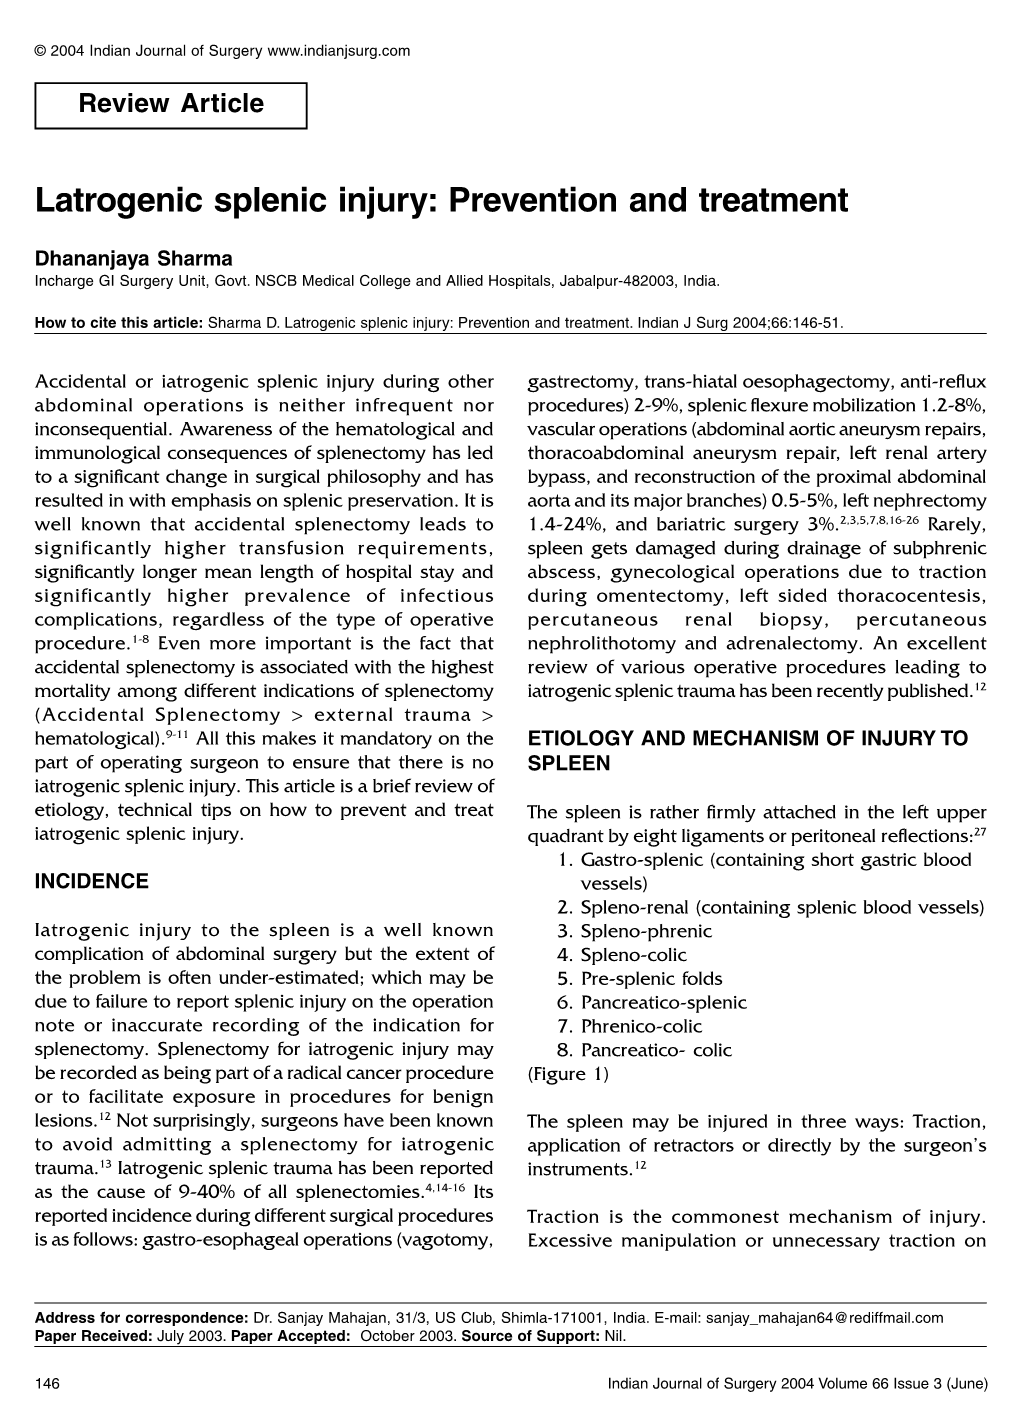 Latrogenic Splenic Injury: Prevention and Treatment